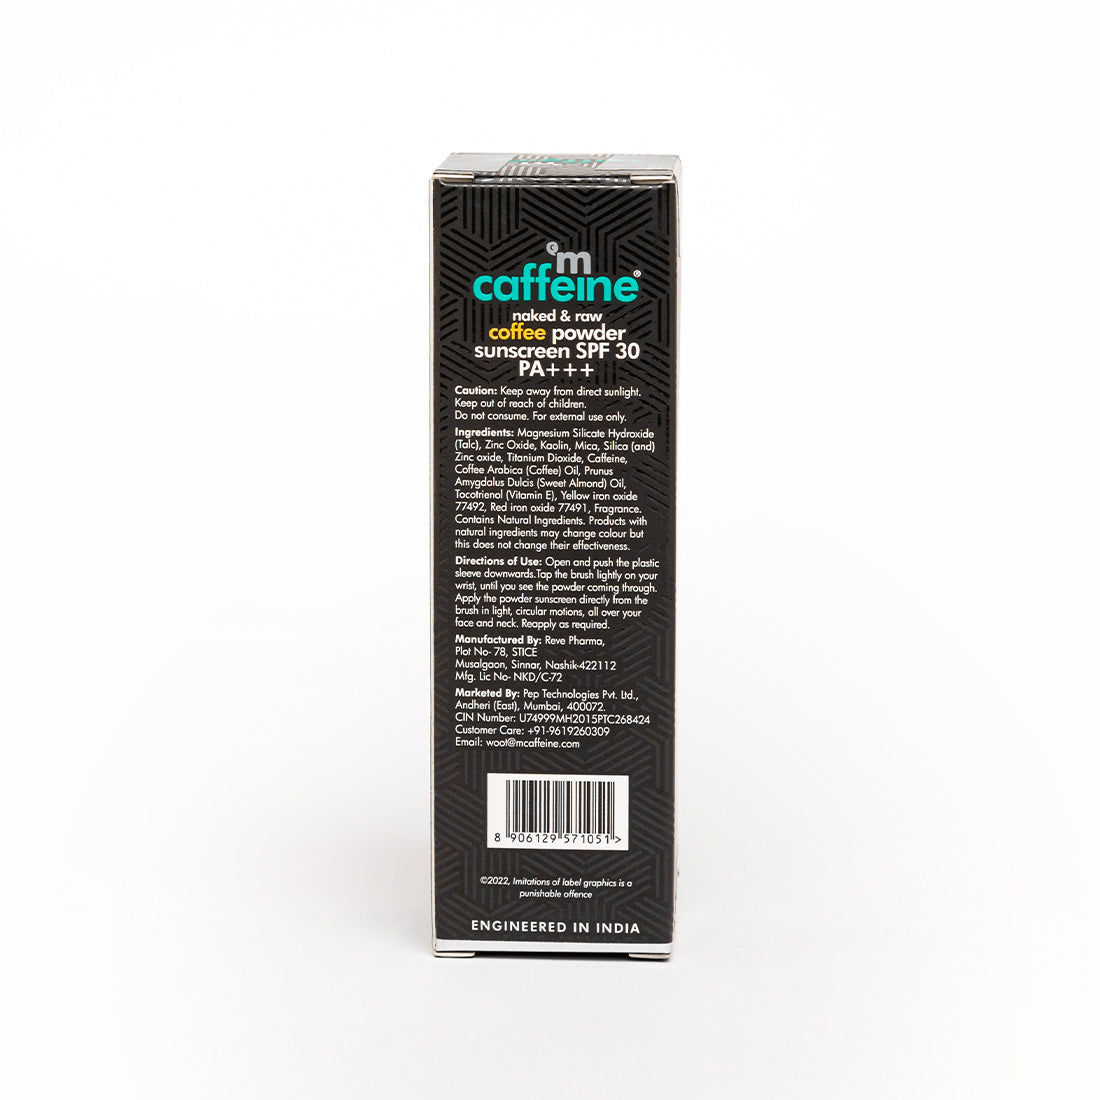 mCaffeine SPF 30 PA+++ Coffee Powder Sunscreen - 100% Mineral, Matte Sunscreen with No White Cast